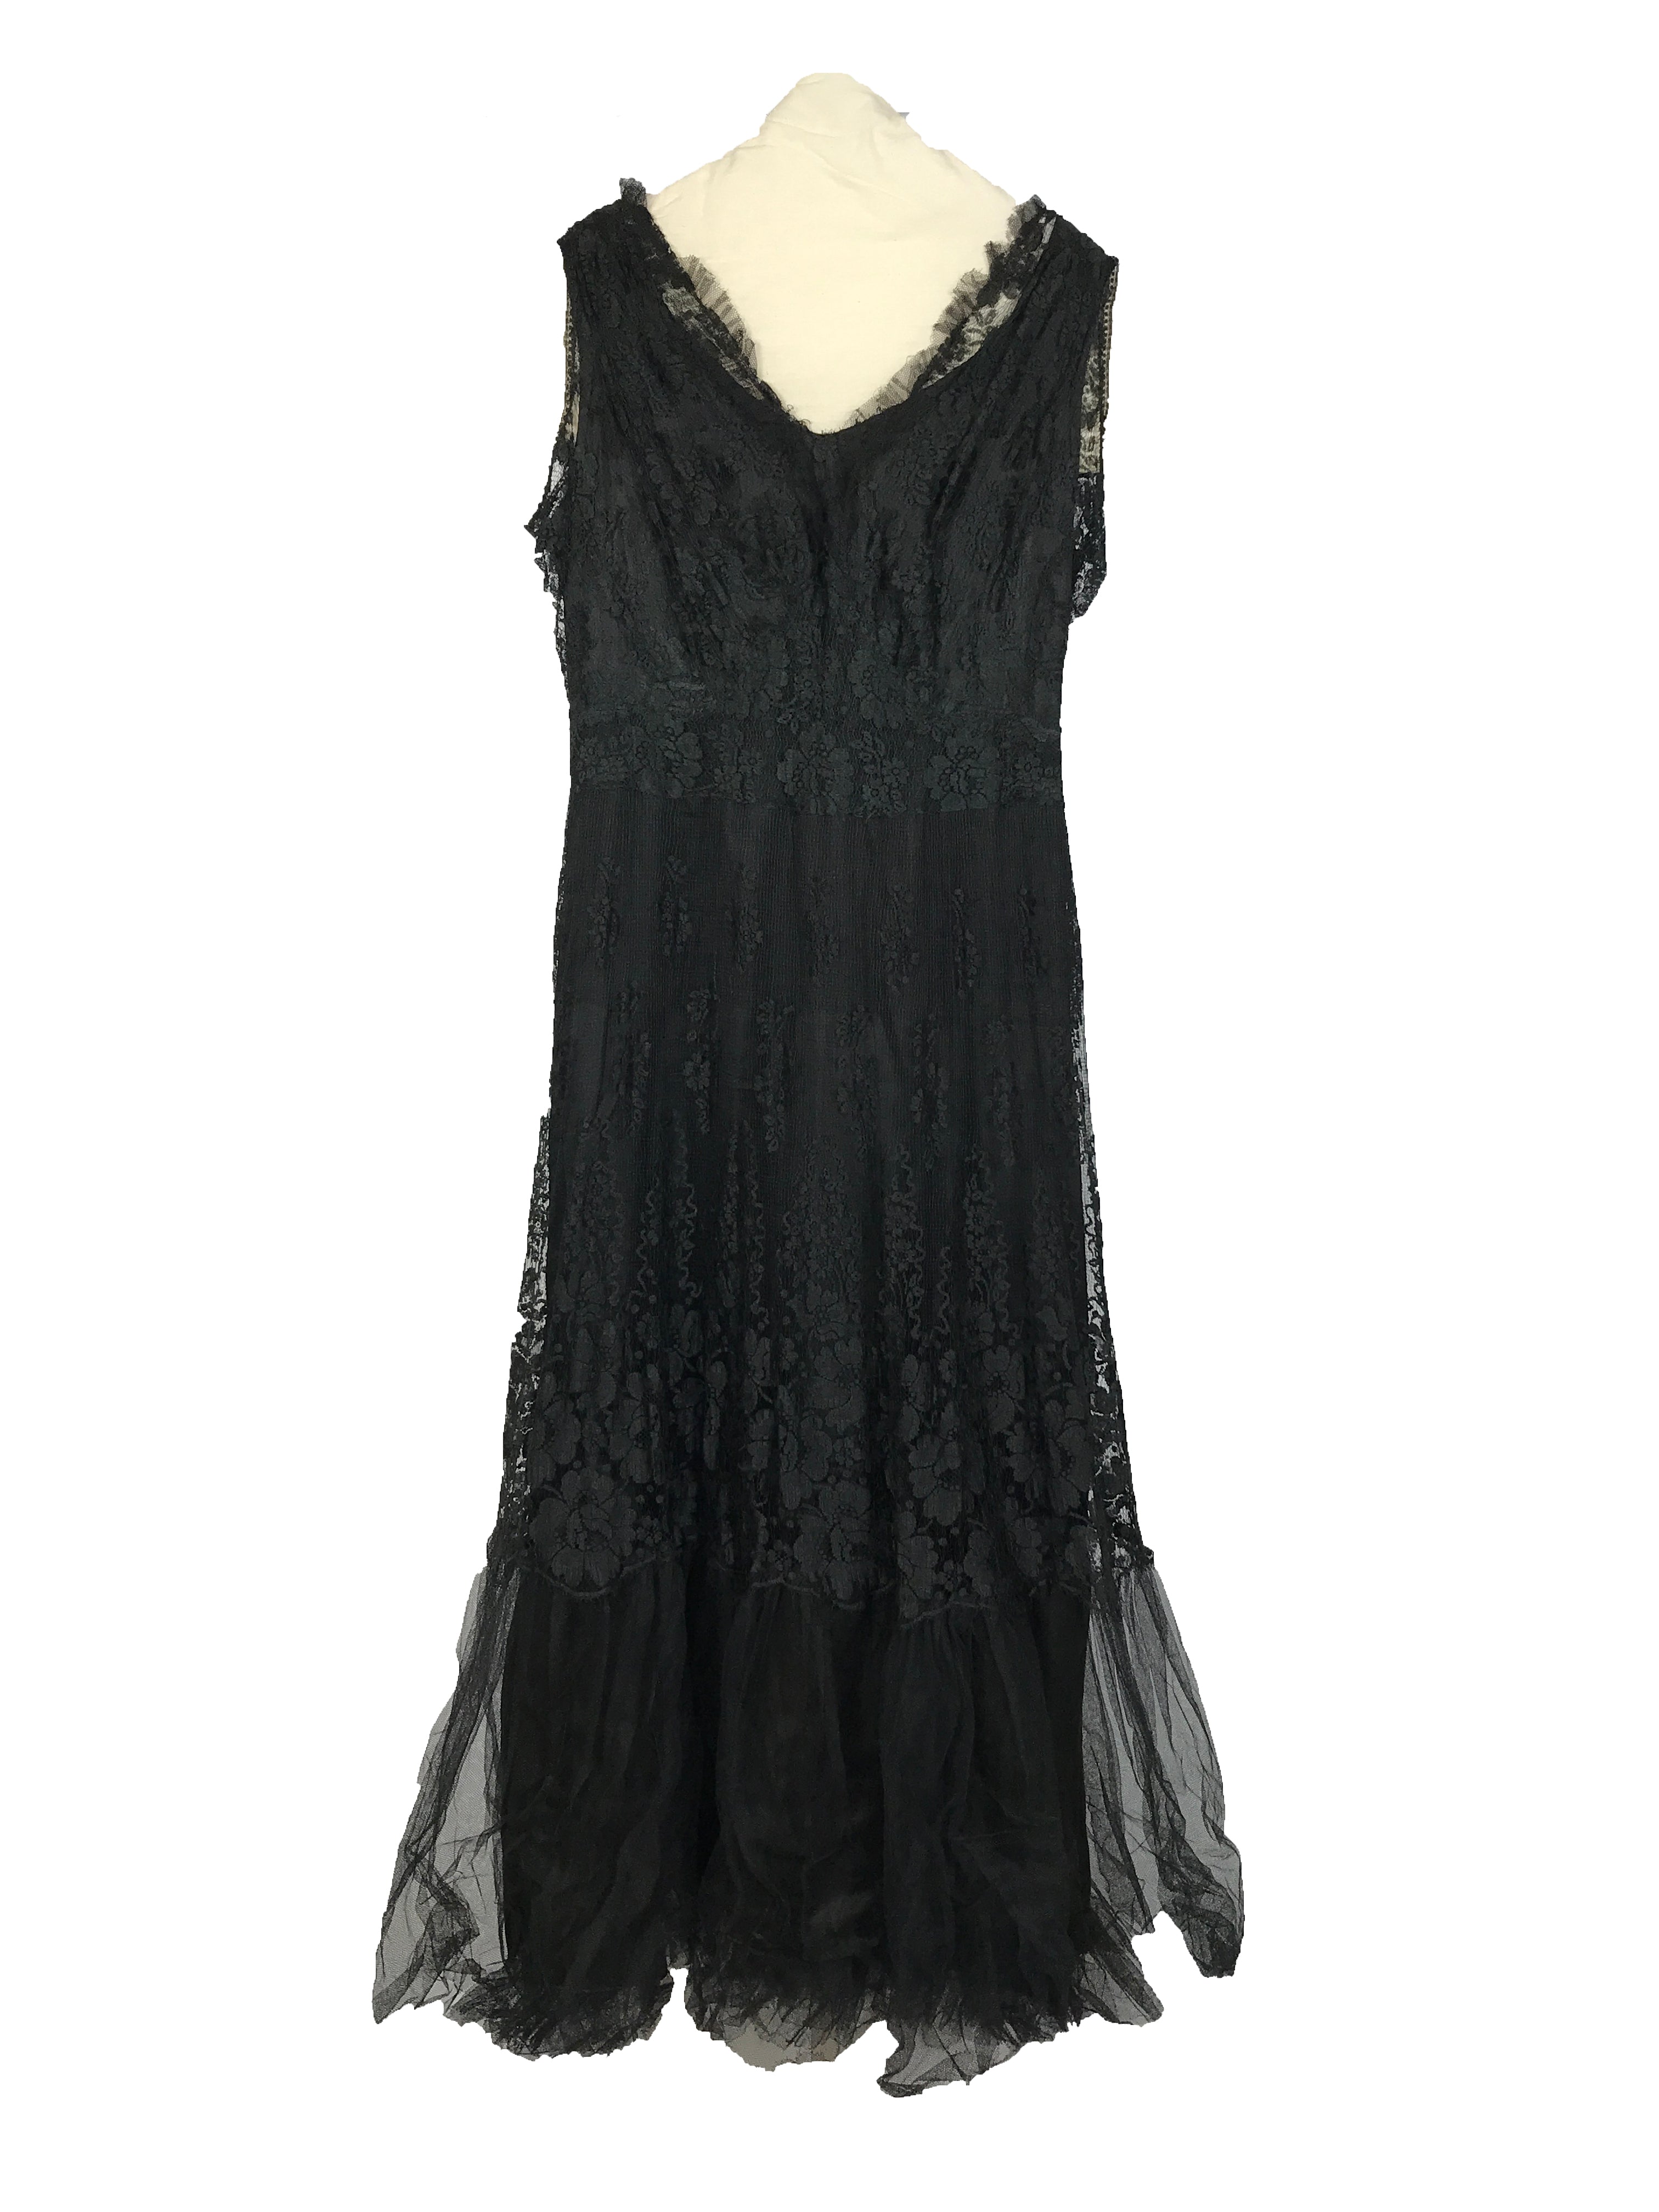 Vintage Black Lace Evening Gown Women's Size Unknown